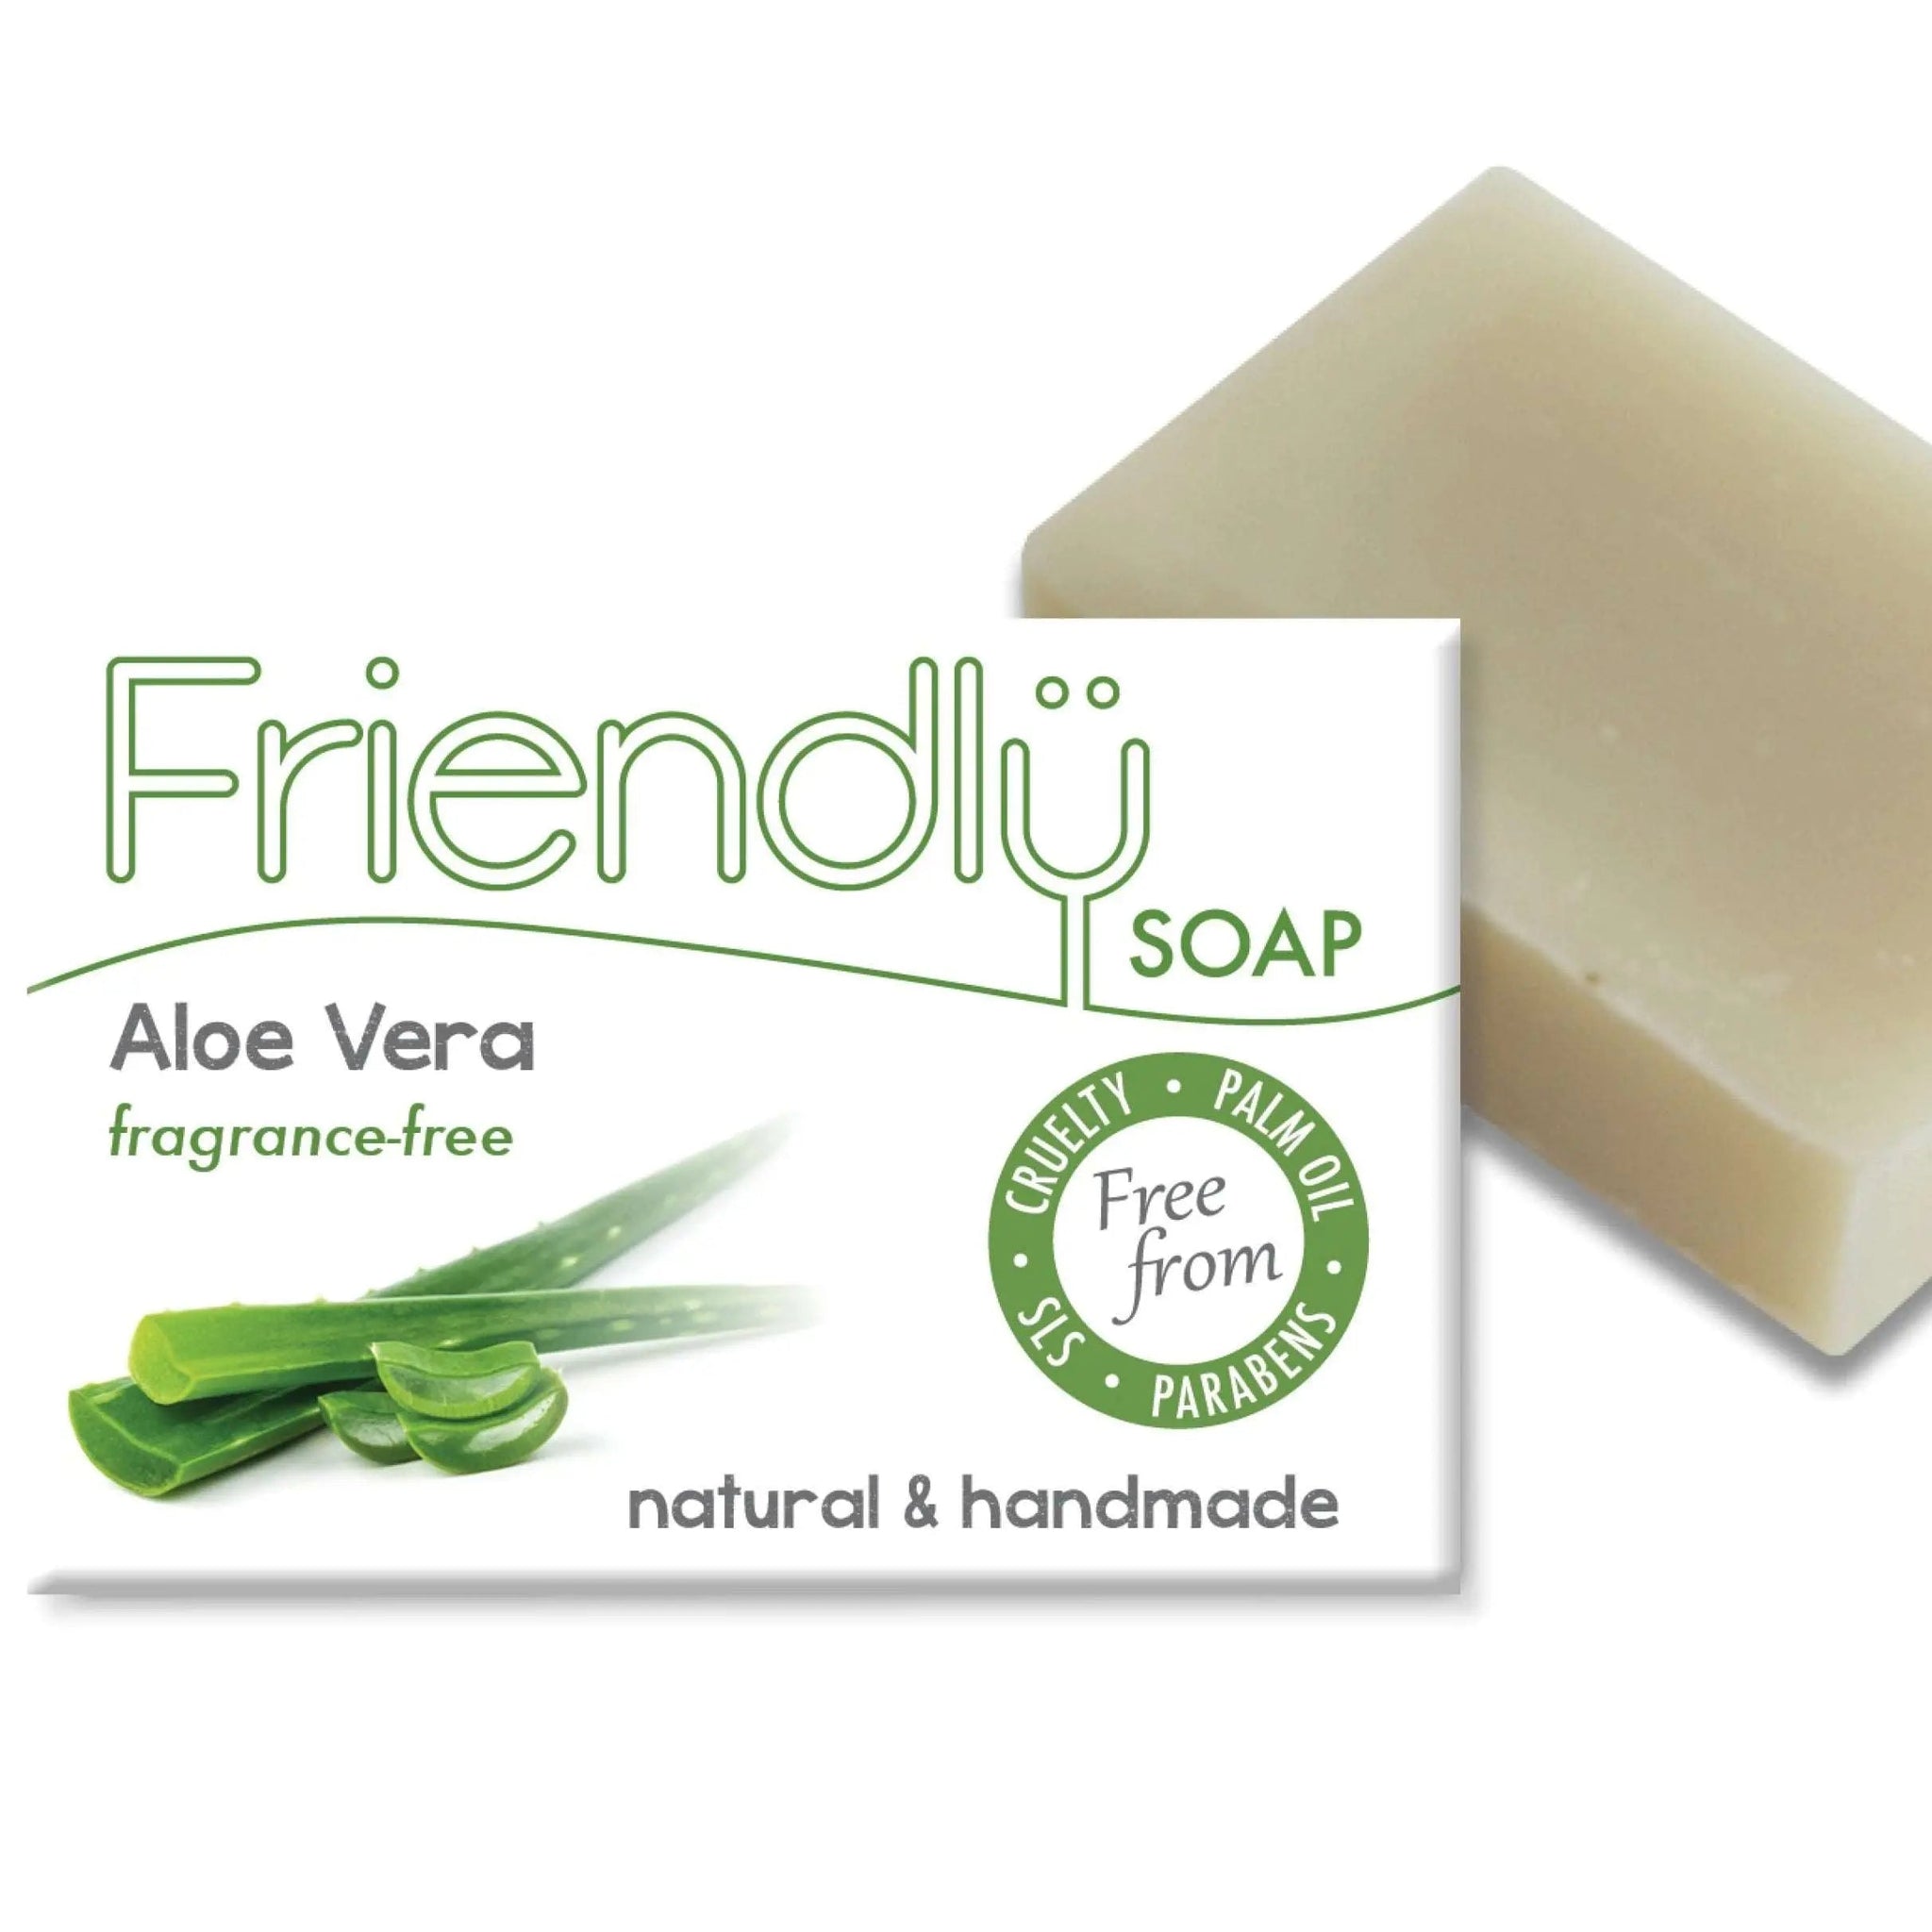 Aloe Vera Natural Soap Bar - Vegan Unscented